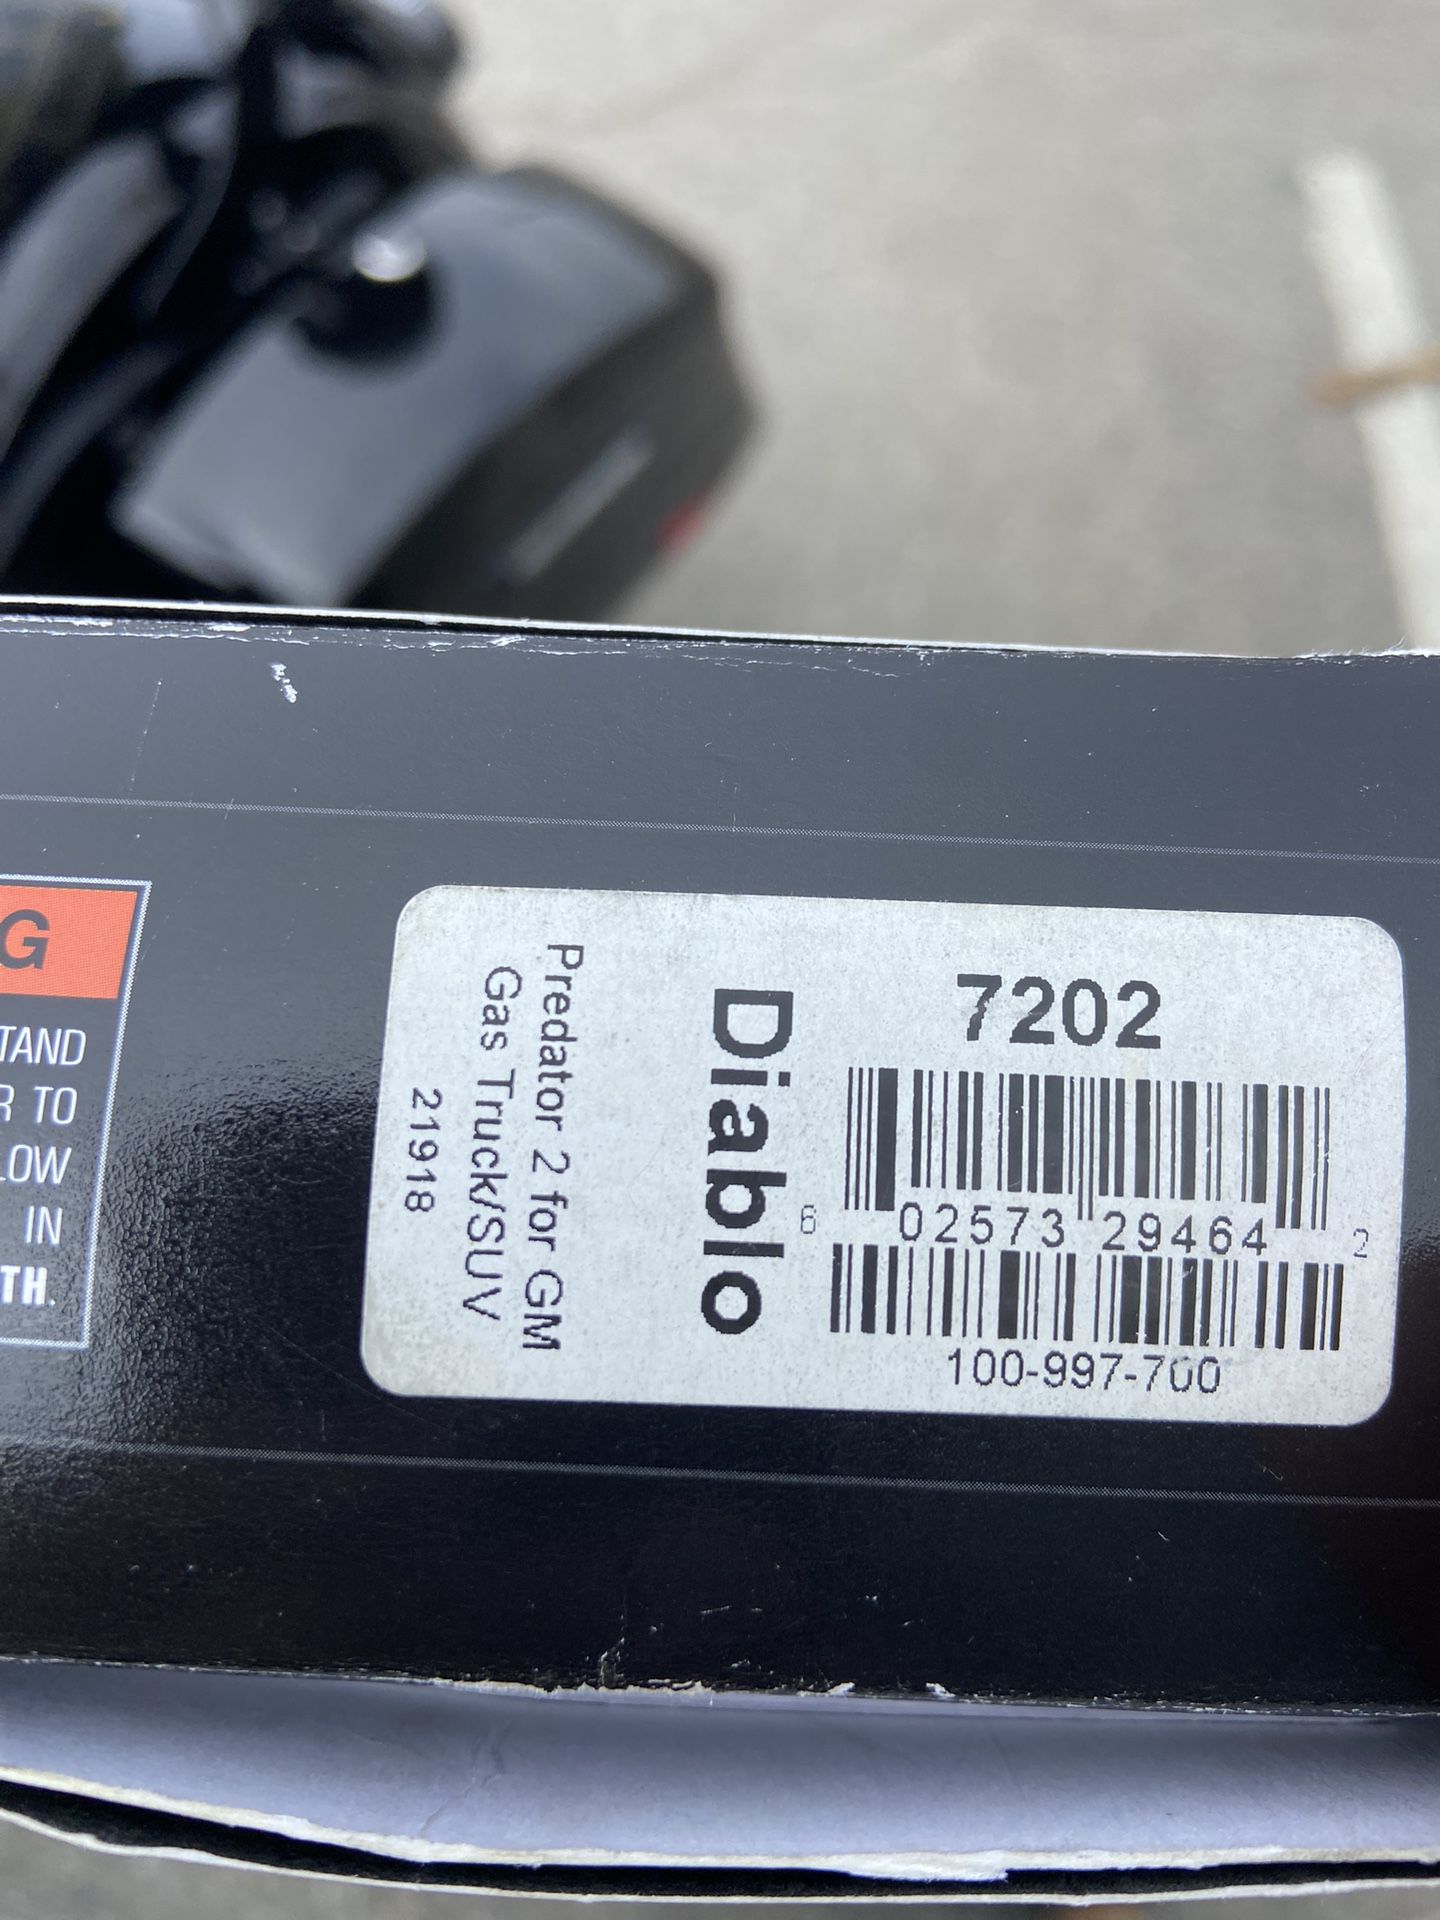 Diablo Tuner 7202 for Sale in Oxnard, CA OfferUp